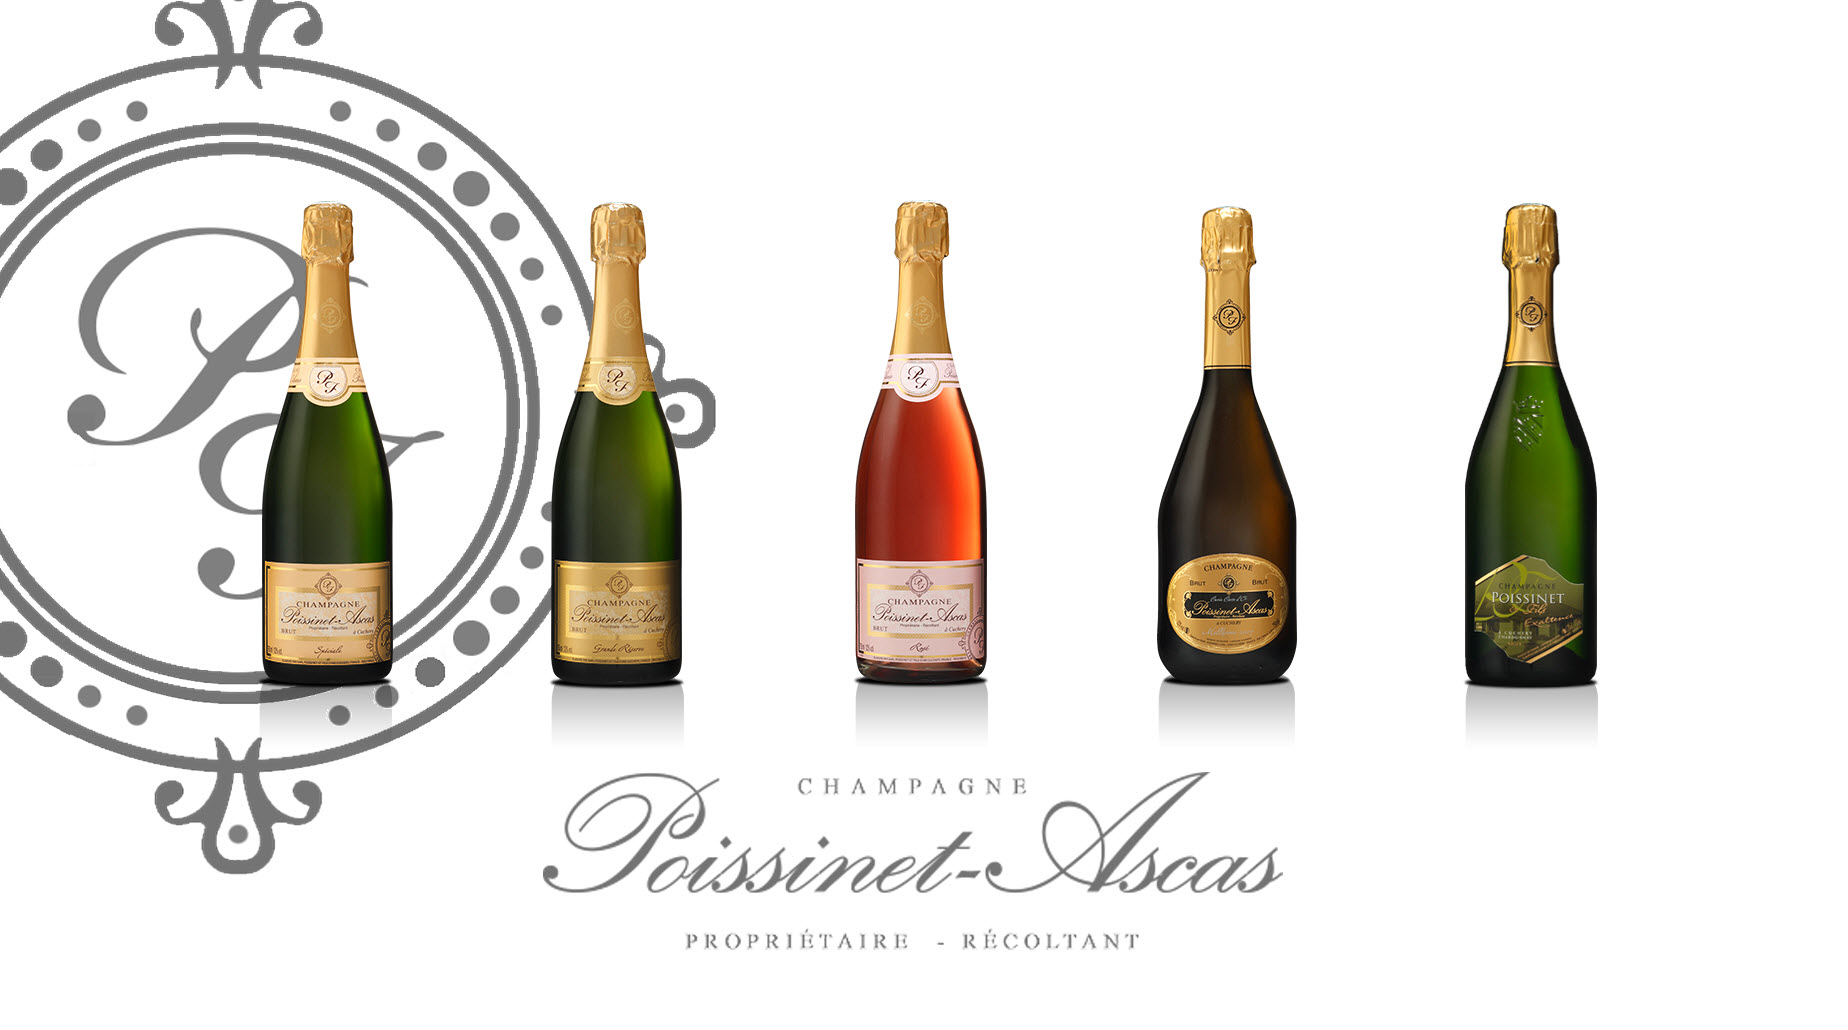 Champagne Poissinet-Ascas